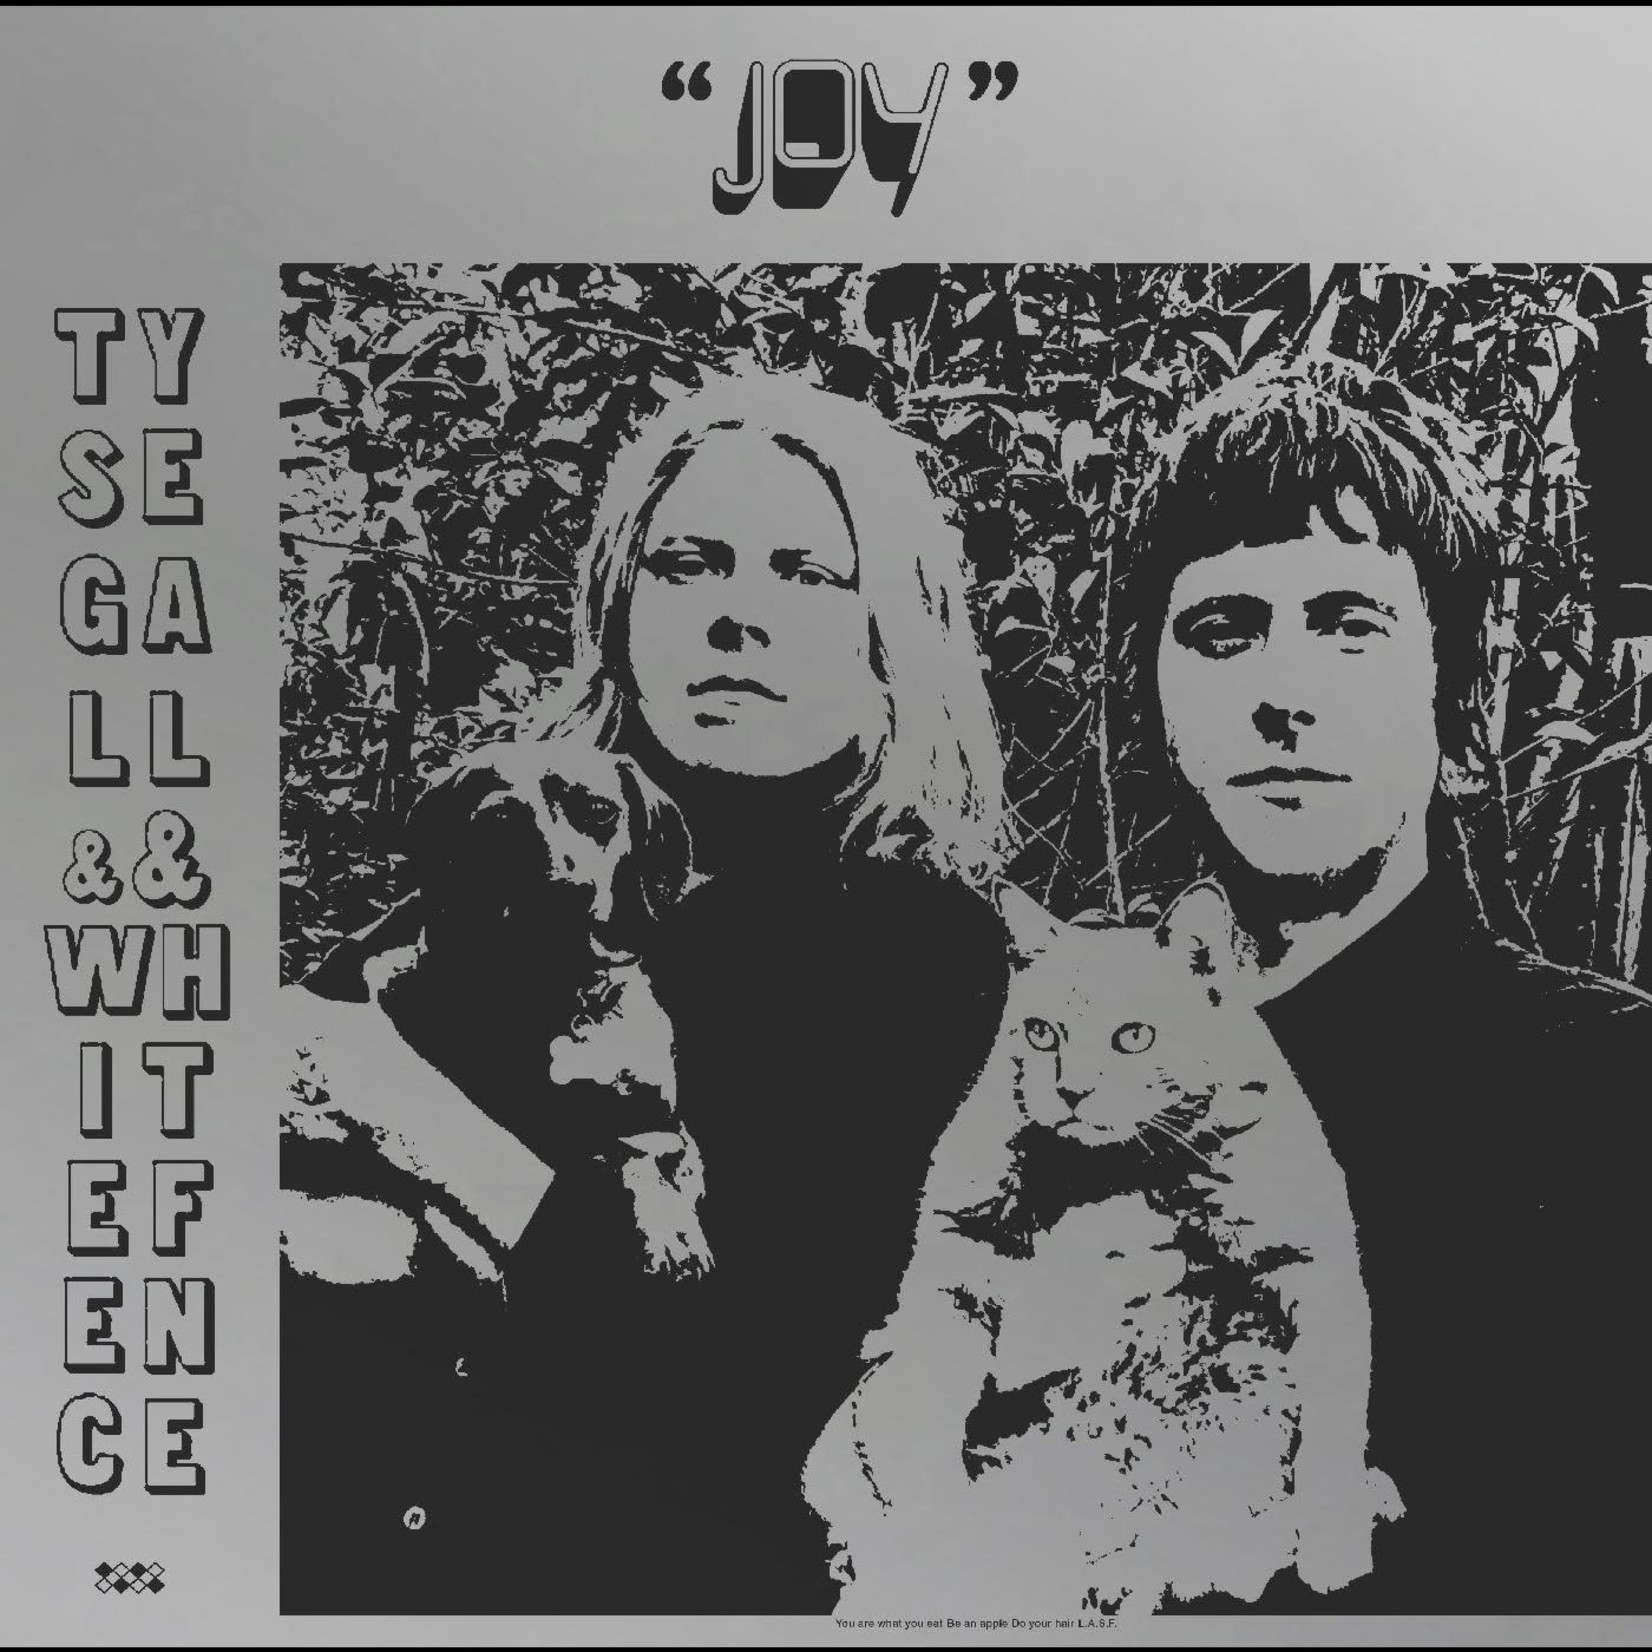 Drag City Ty Segall & White Fence - Joy (LP)